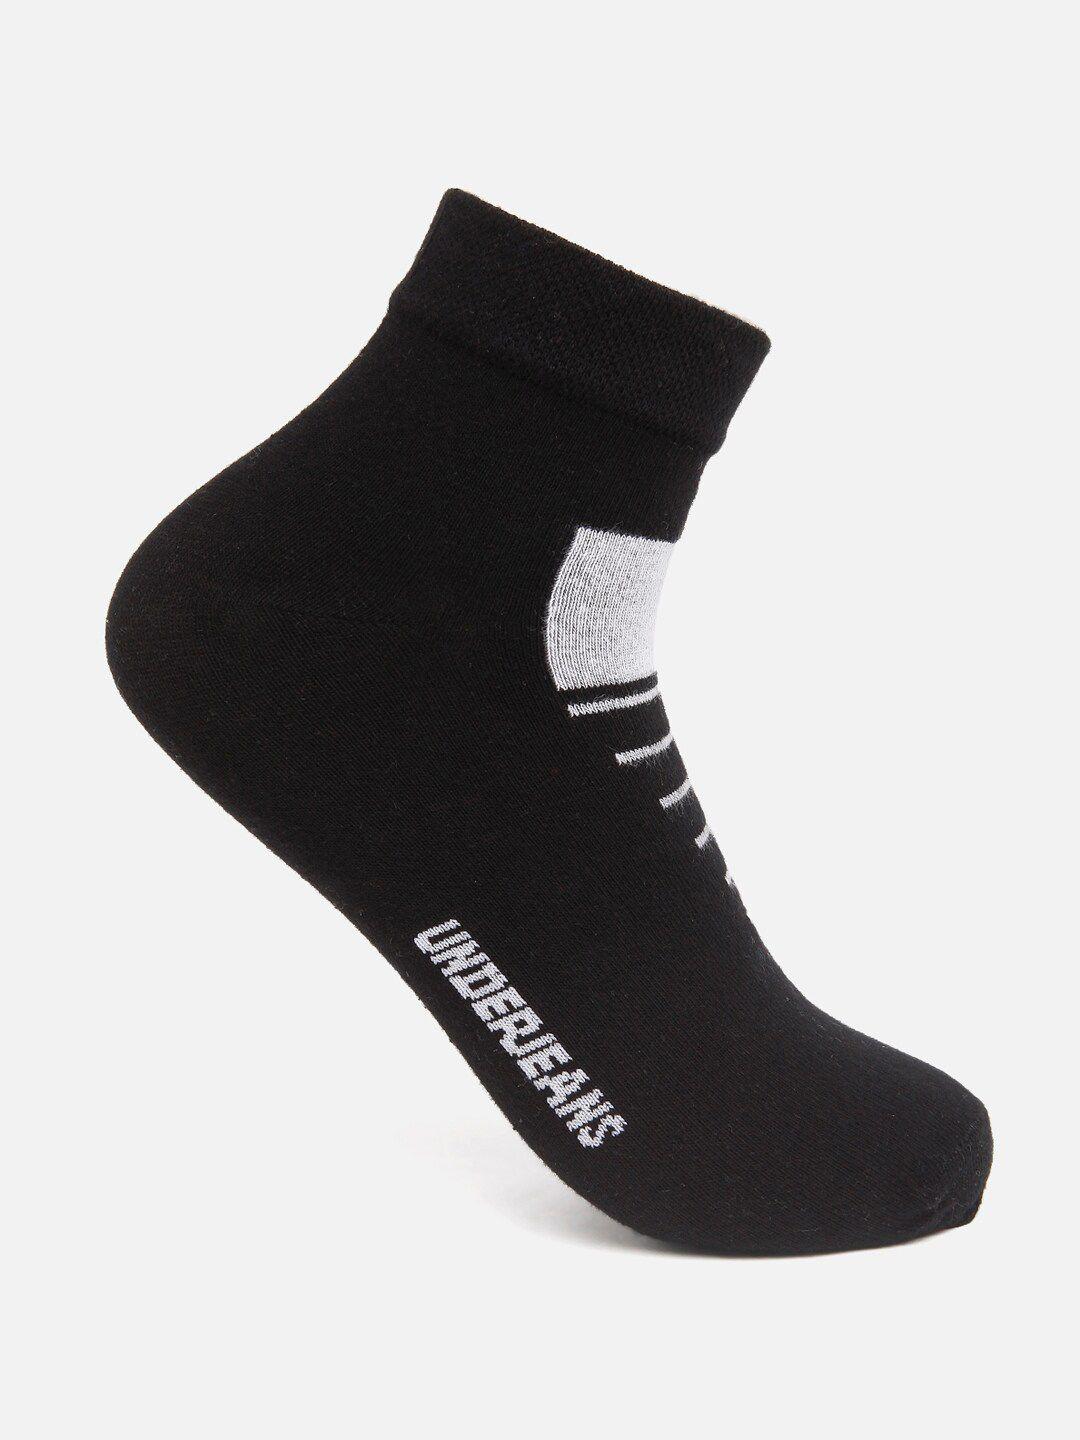 underjeans-by-spykar-men-ankle-length-non-terry-single-pair-of-socks